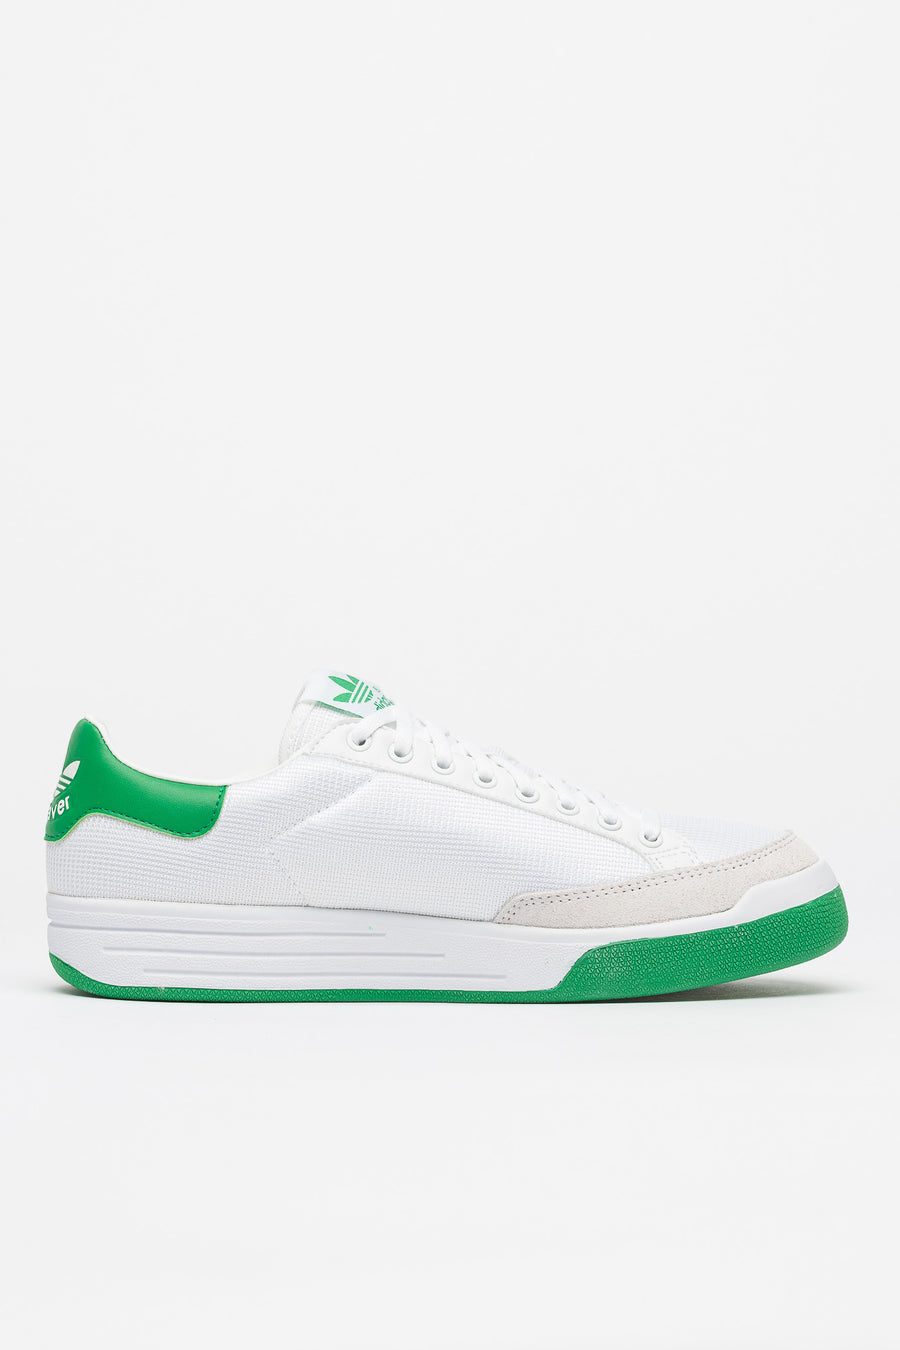 adidas rod laver green white